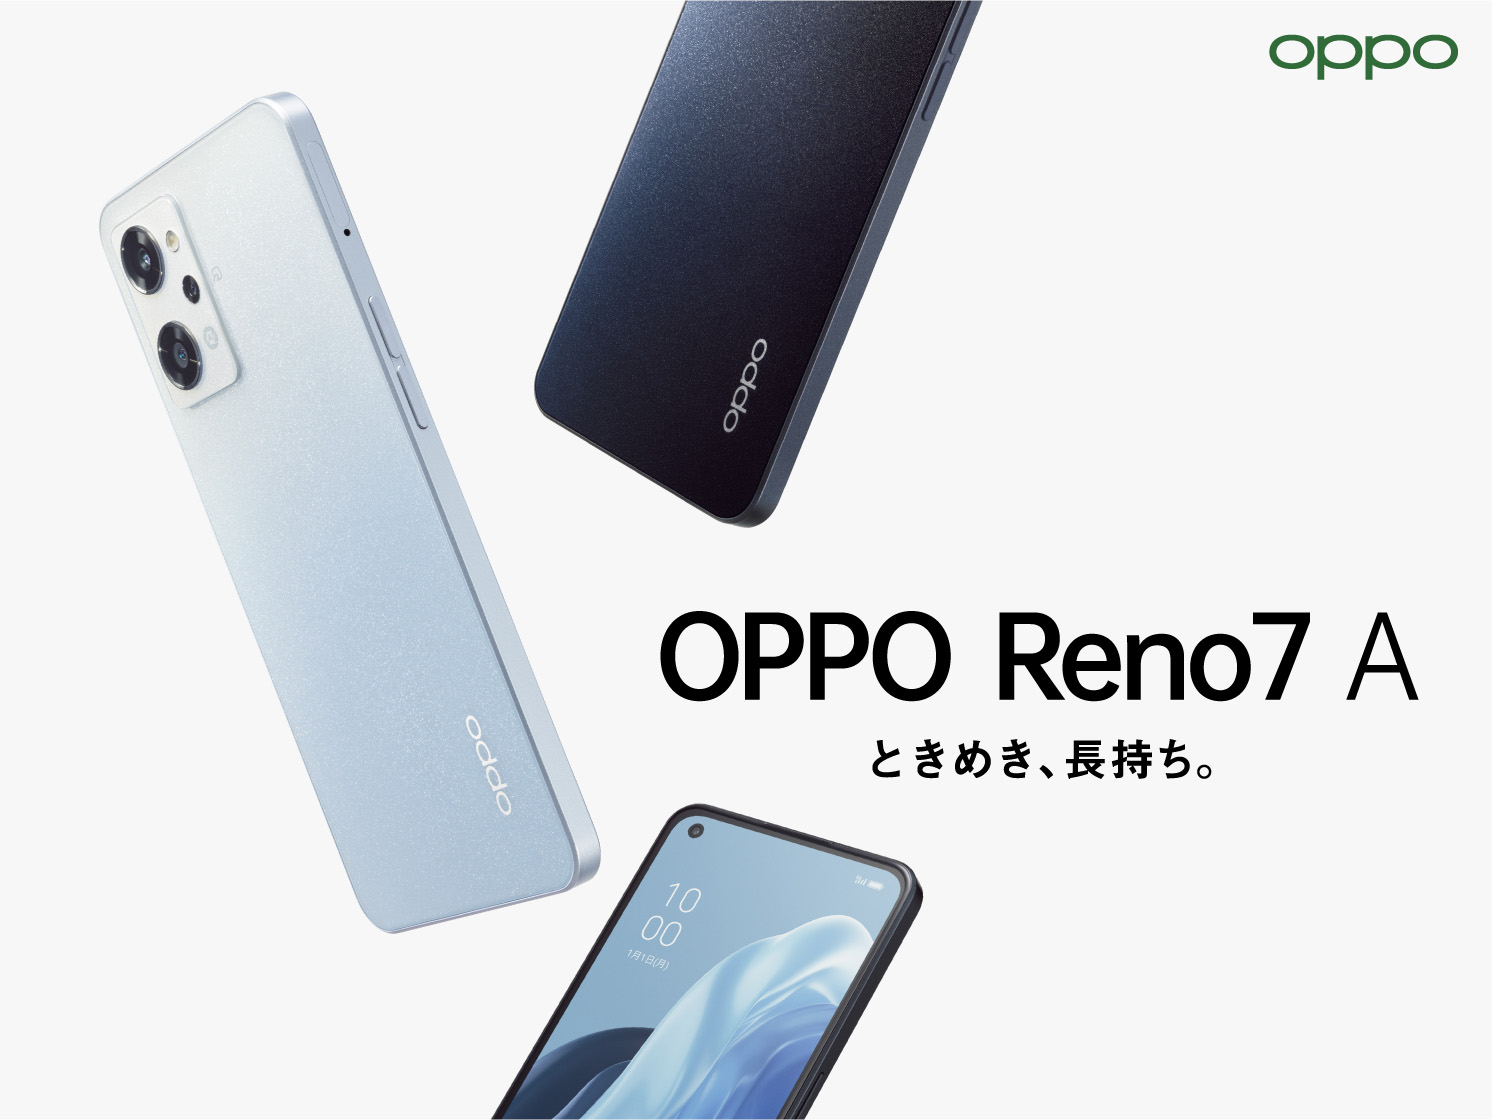 OPPO Reno7 A」が6月23日(木)から販売開始 コンセプトは「ときめき、長持ち。」 オウガ・ジャパン